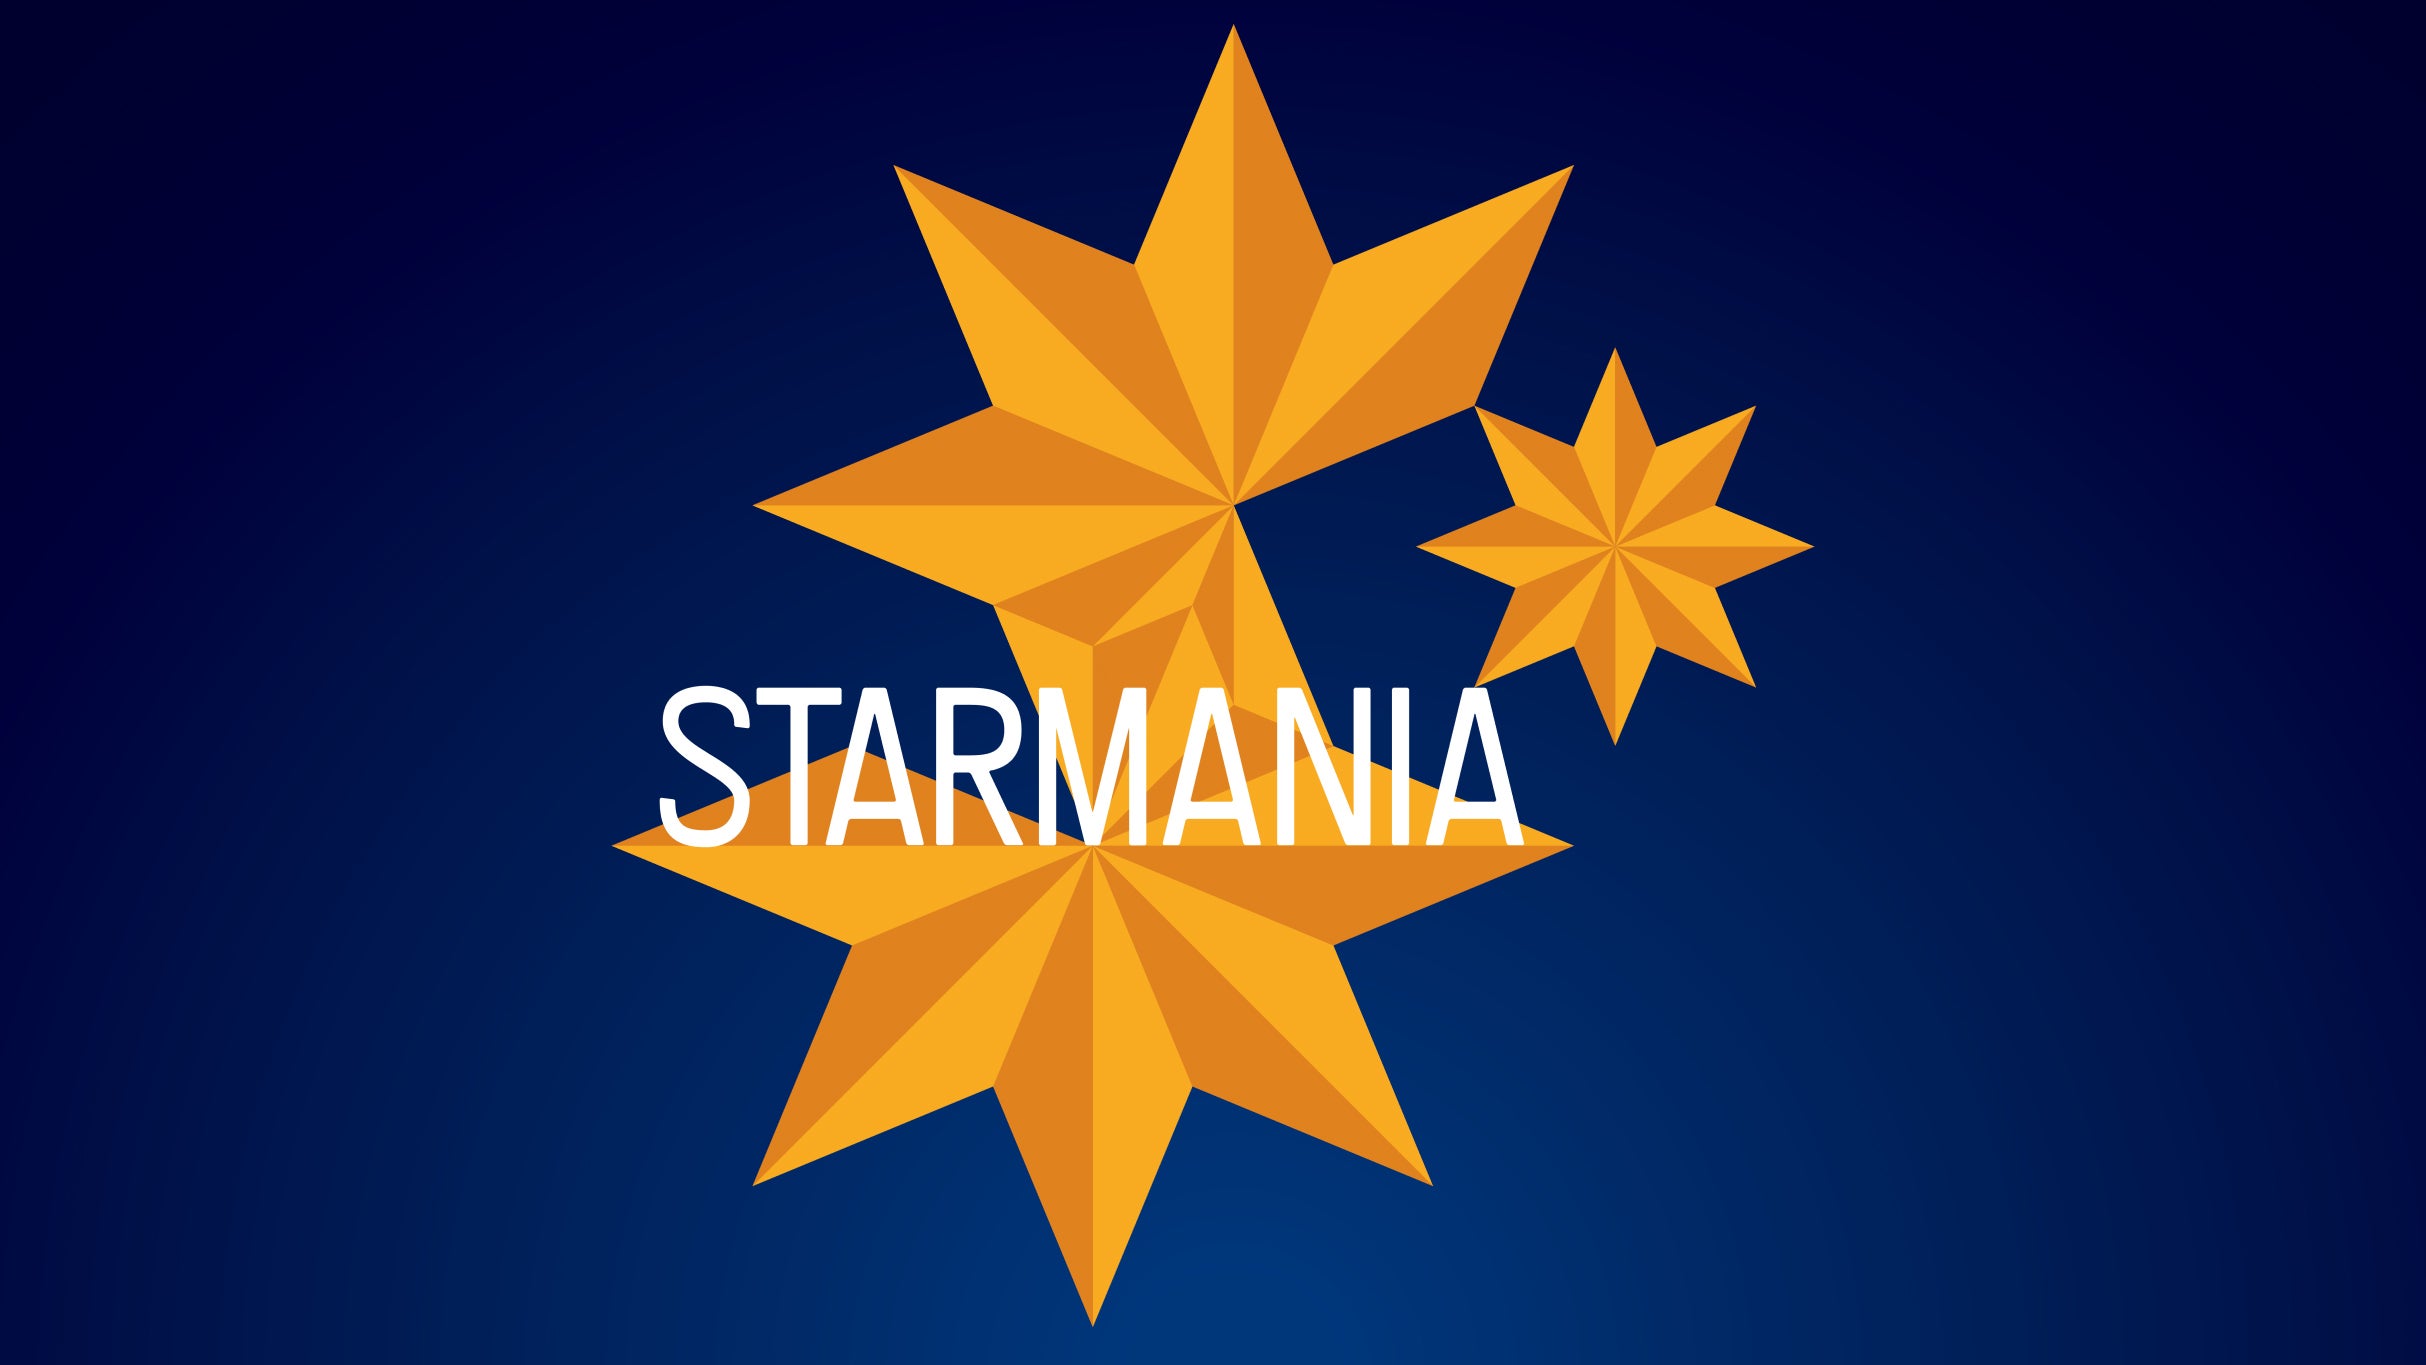 Starmania presale information on freepresalepasswords.com